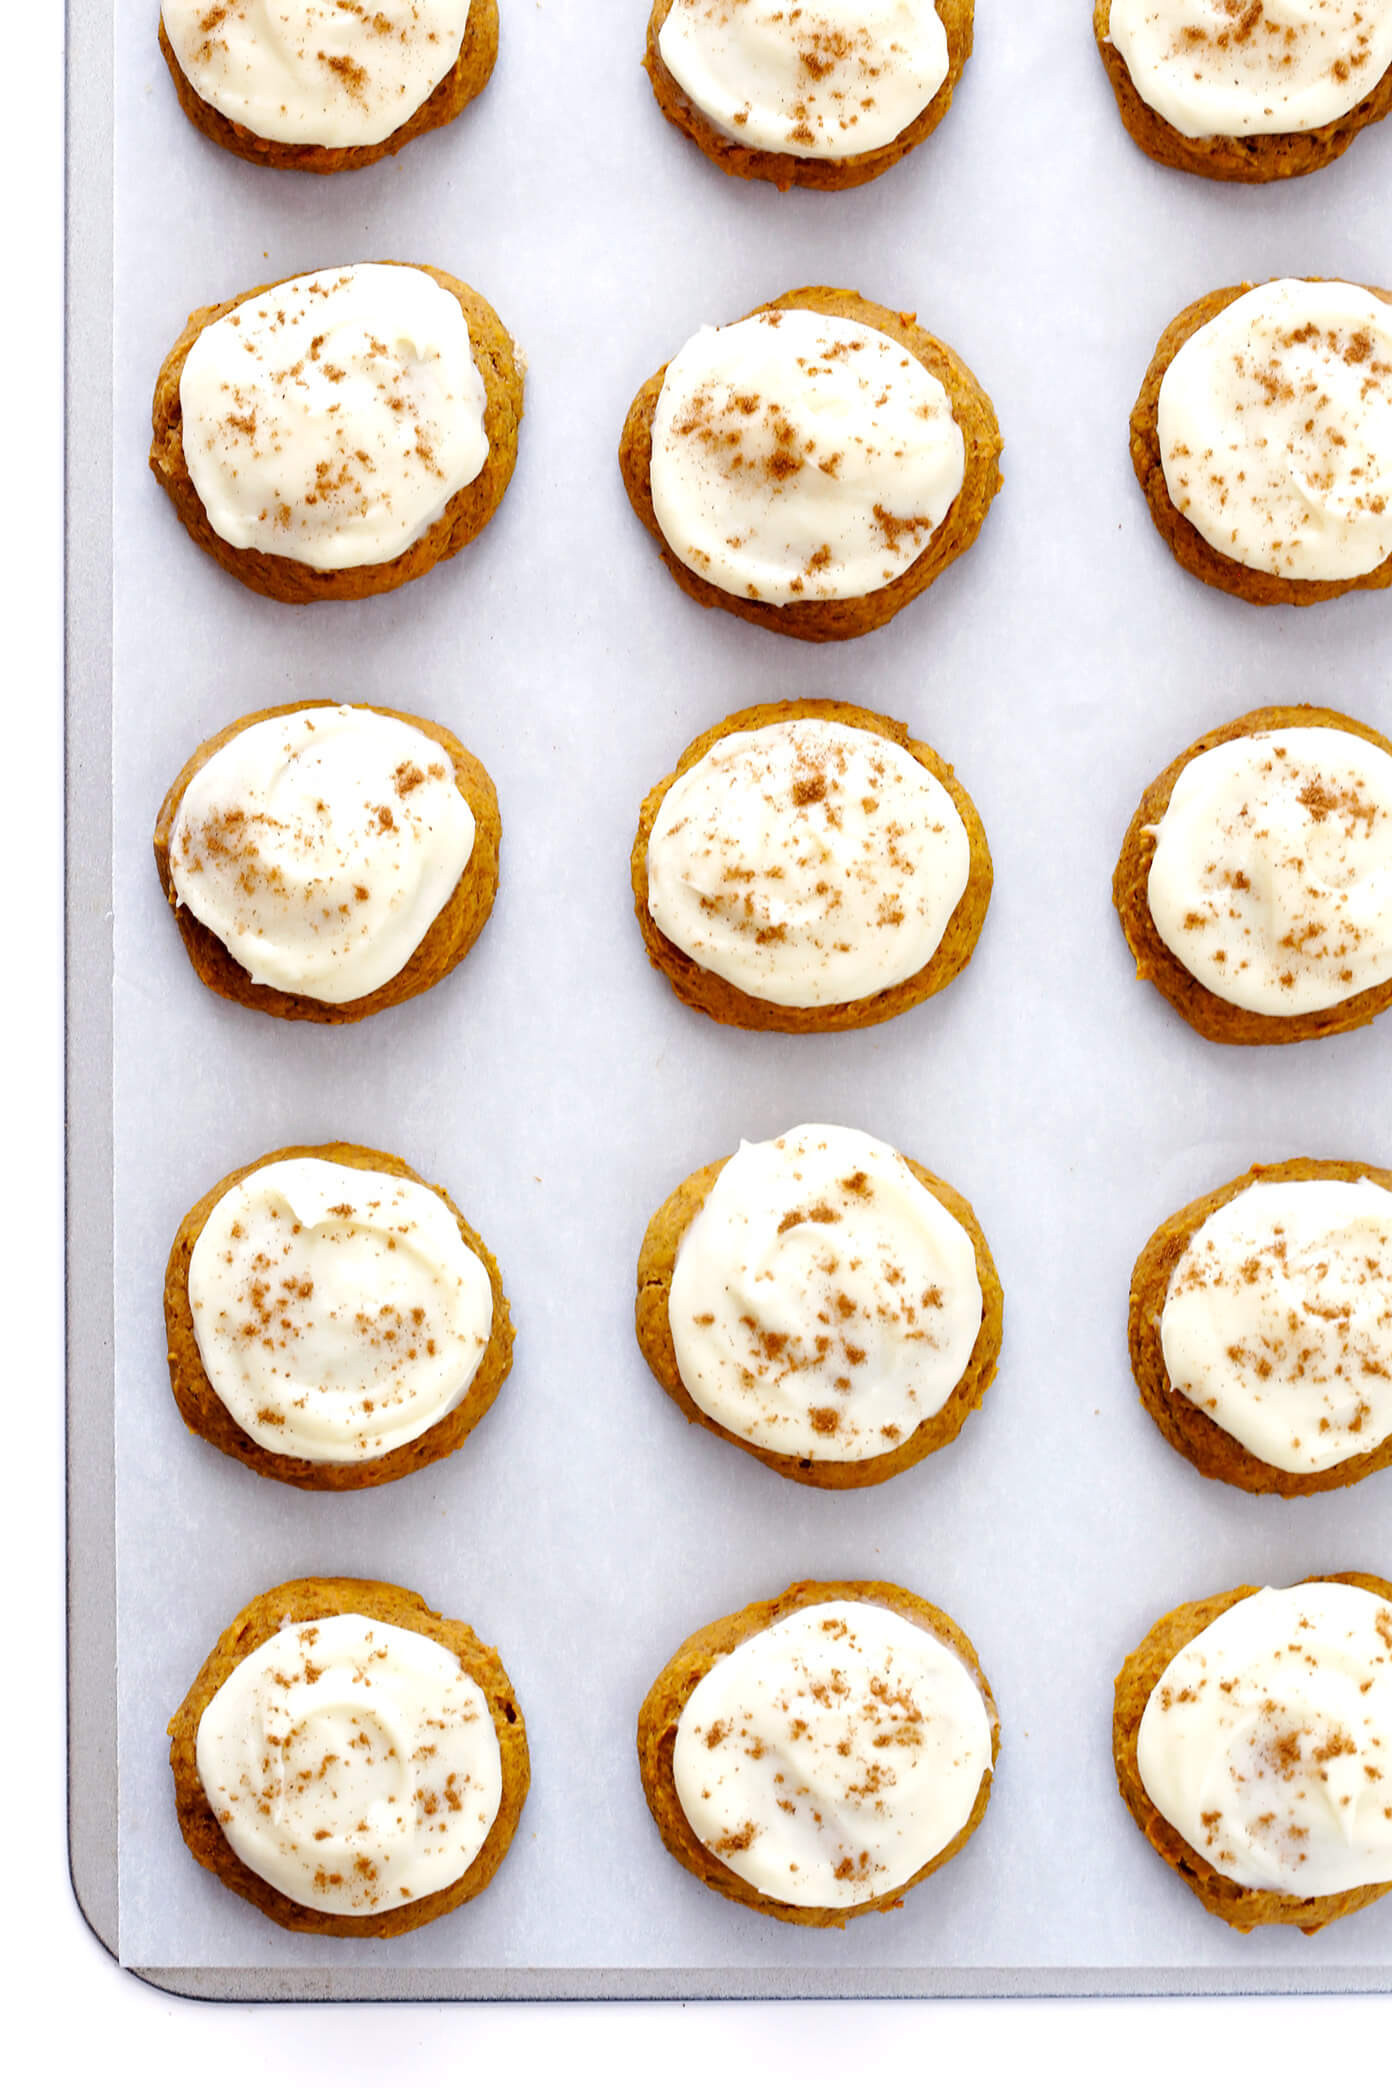 Word Cookies Pumpkin
 Pumpkin Cookies with Cream Cheese Frosting Cravings Happen